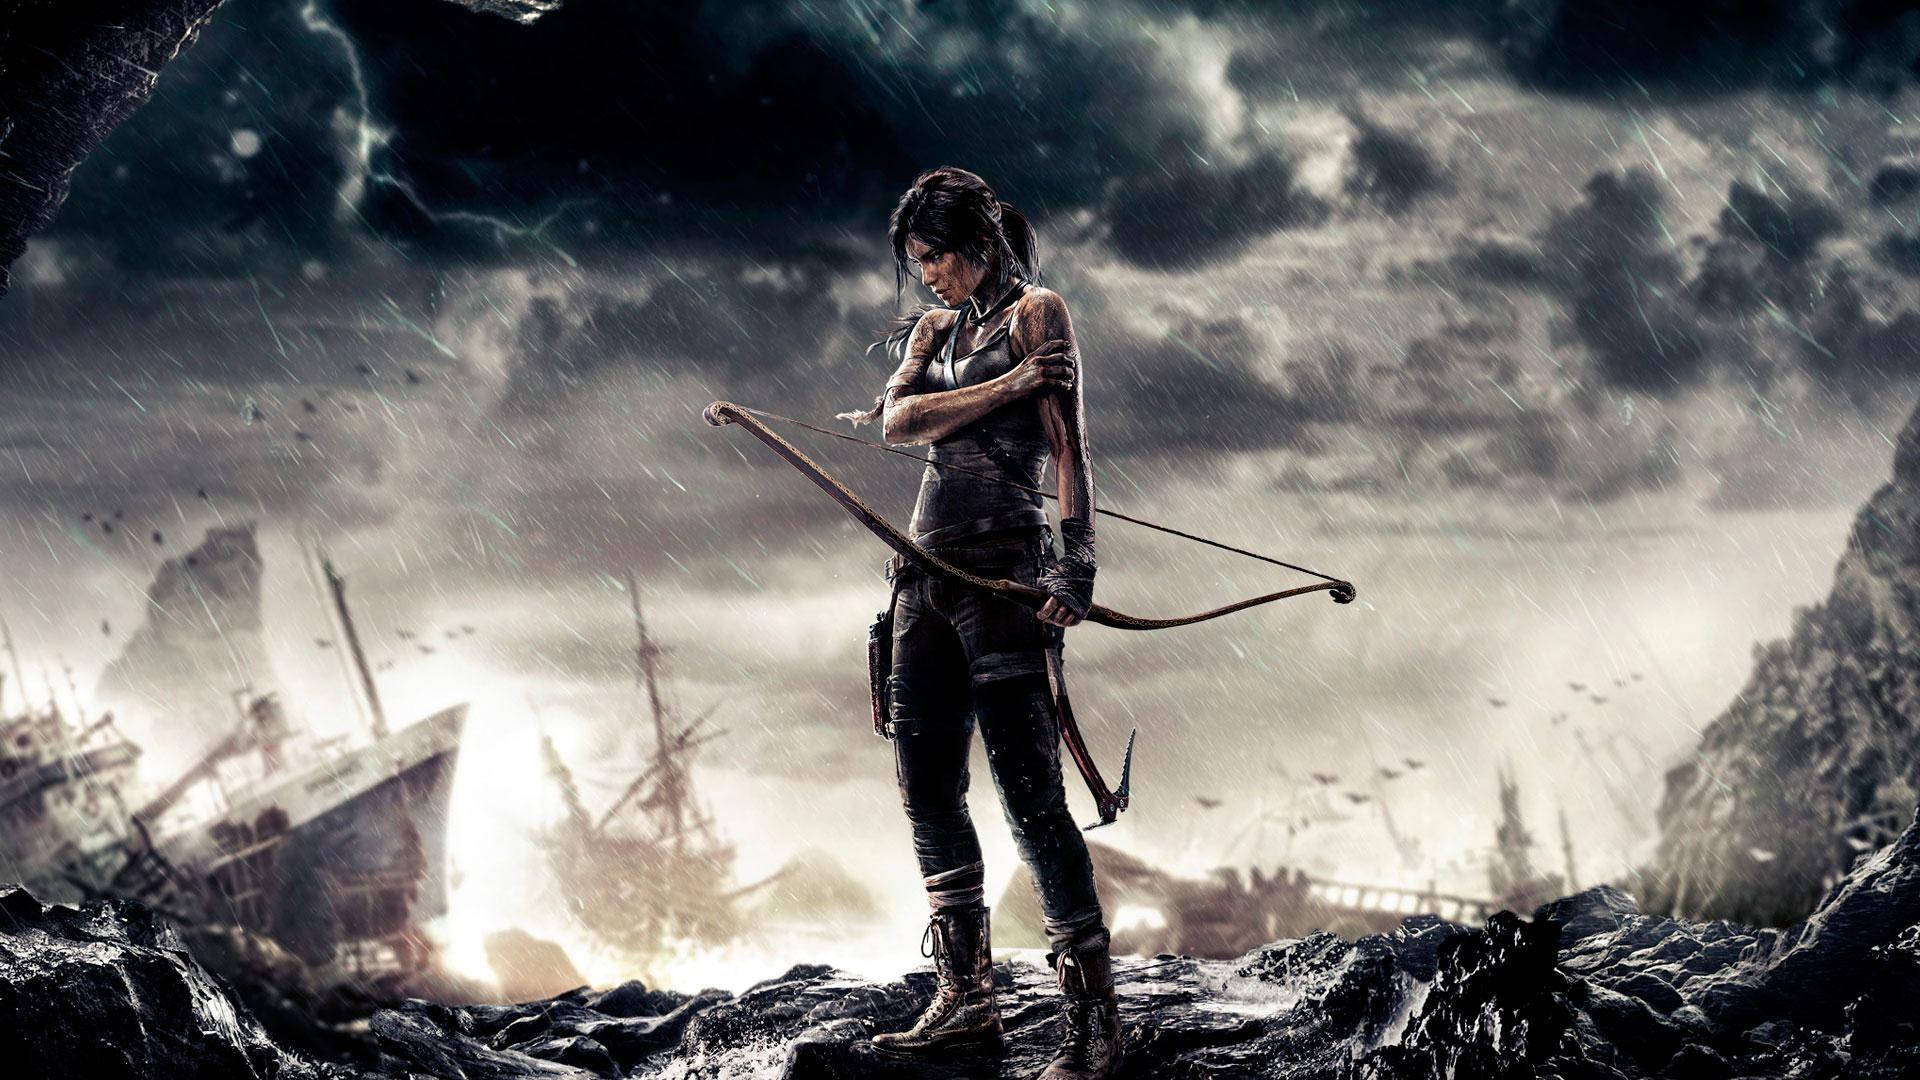 Tombraider 9 Lara Croft På Havet Under Regn. Wallpaper